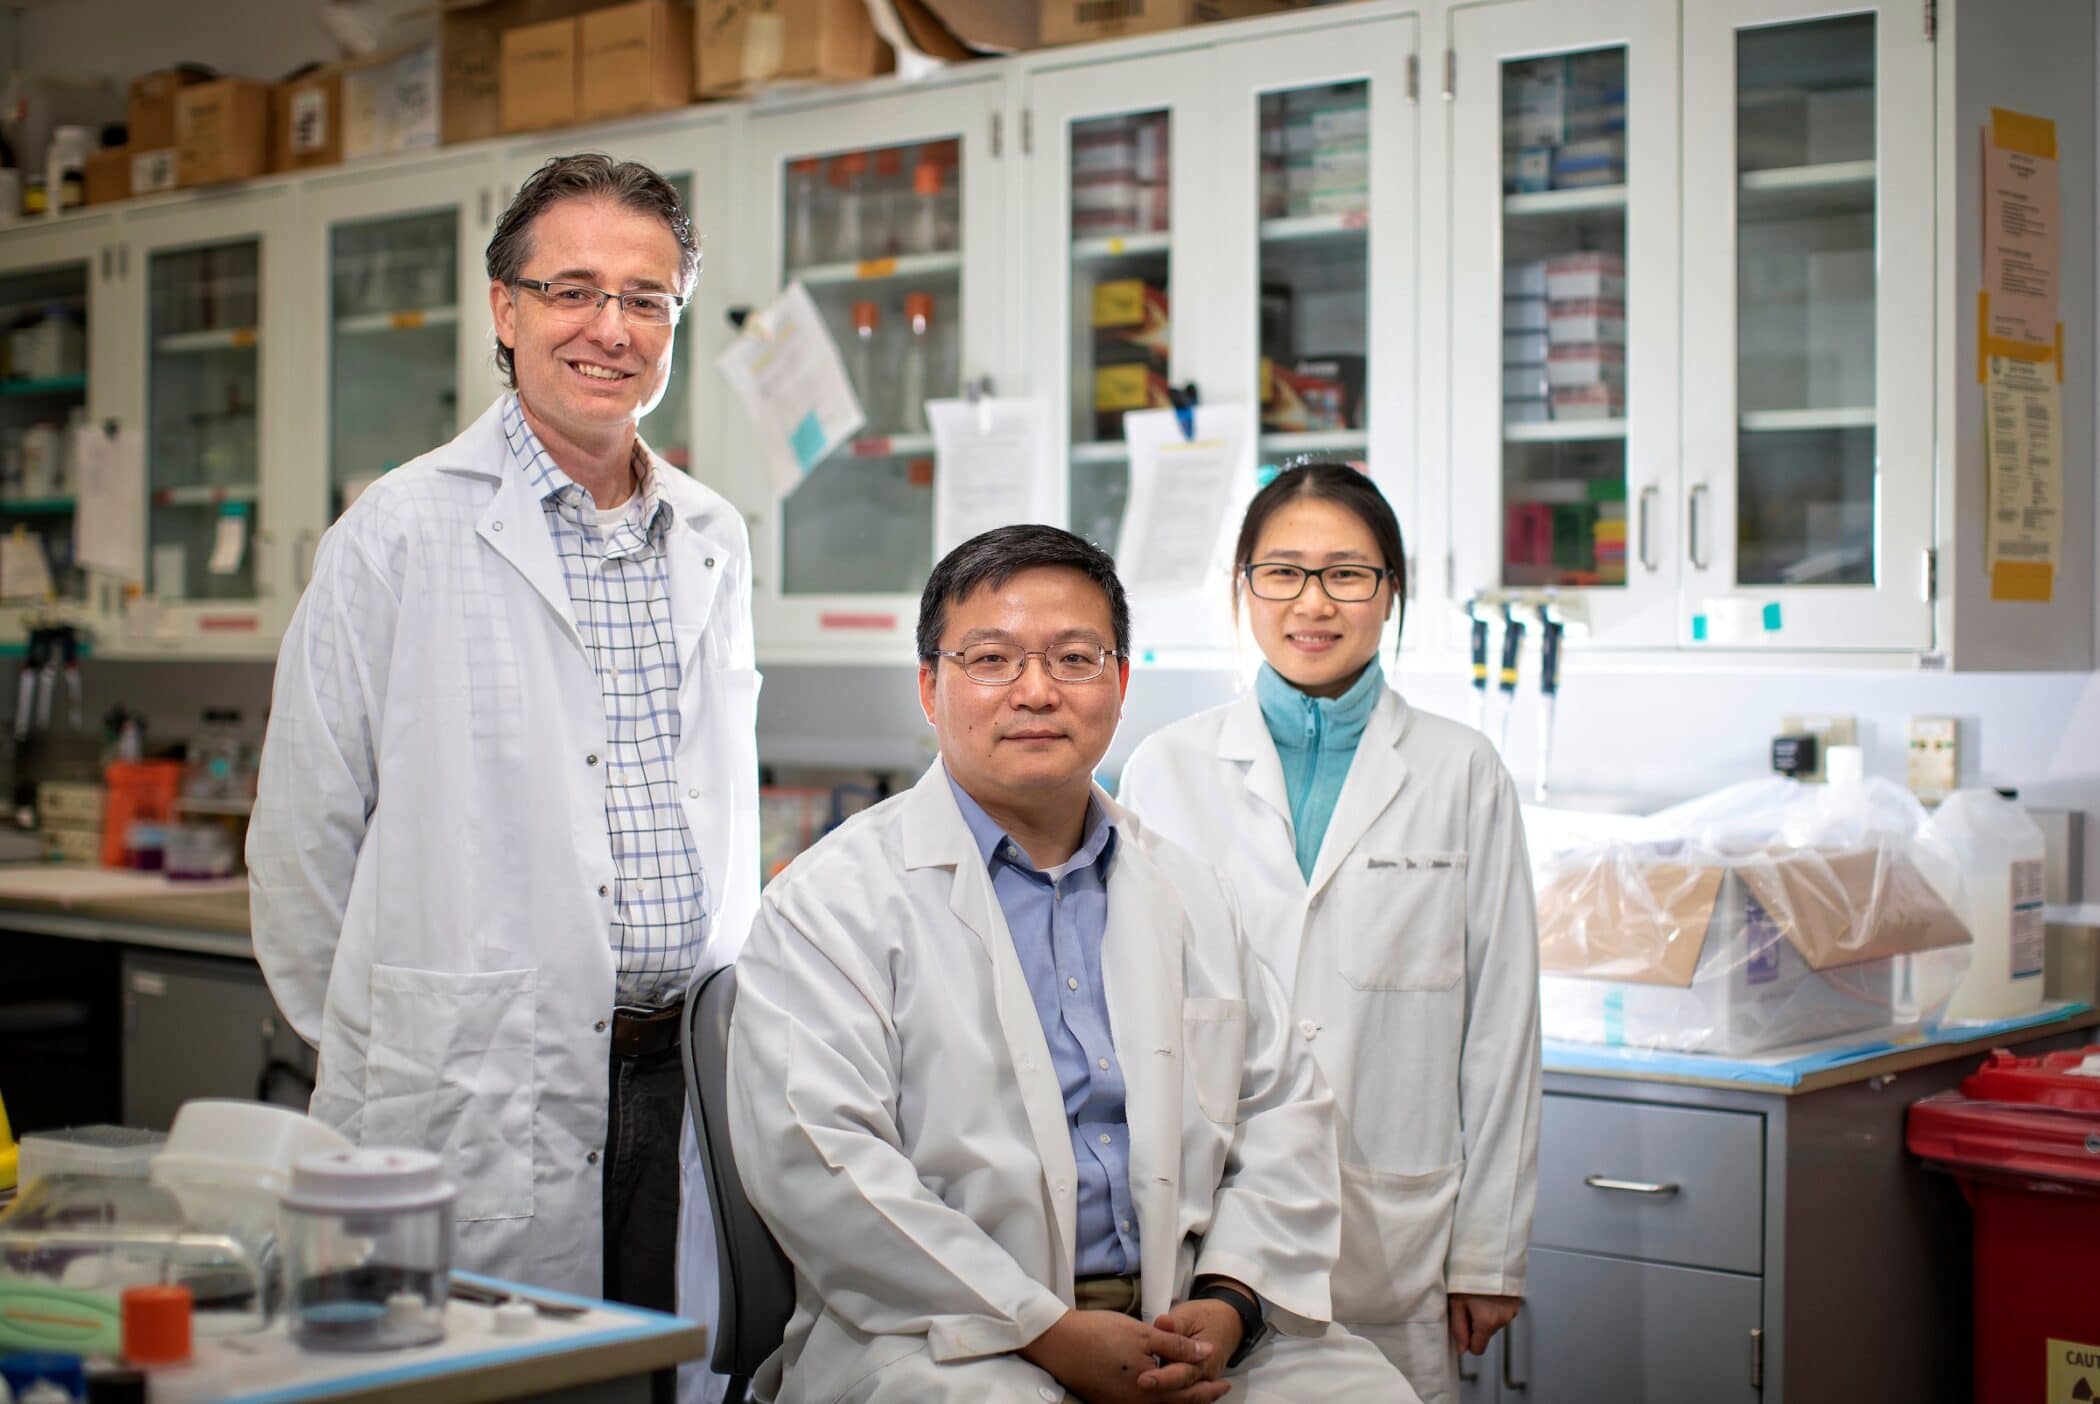 Dr. Matthew Gentry, Haining Zhu and Lisha Kuang